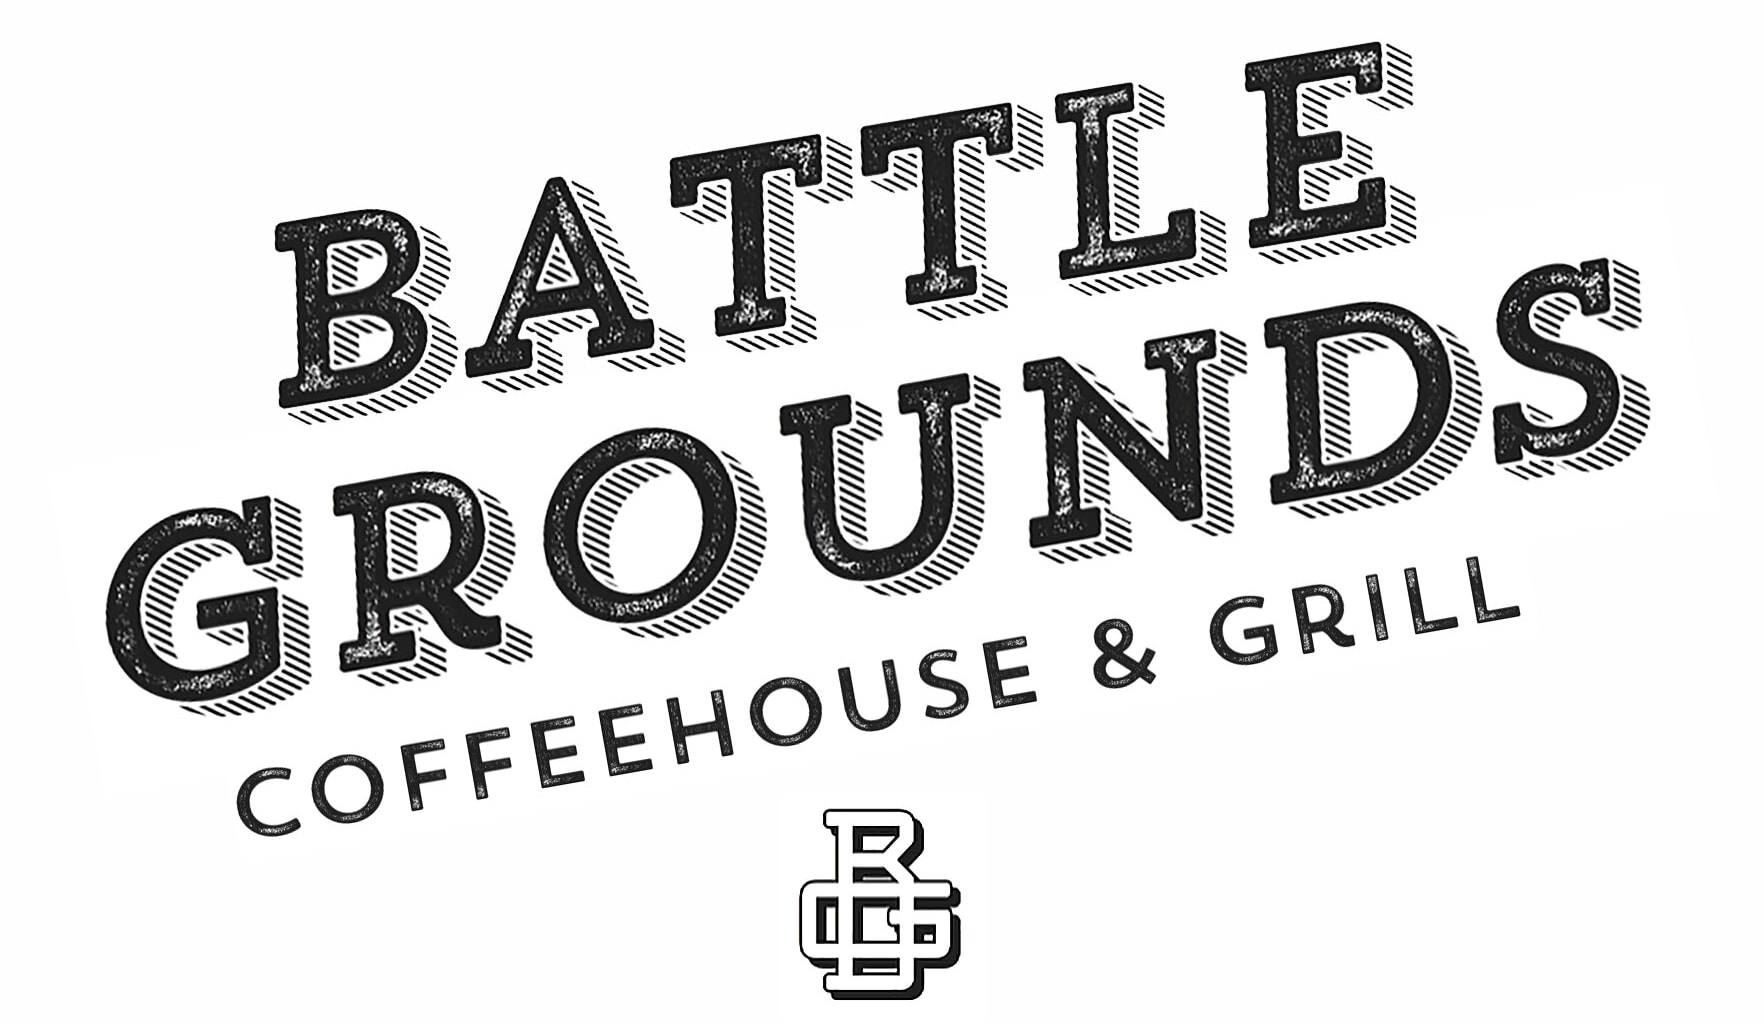 Battlegrounds Coffee House & Grill logo